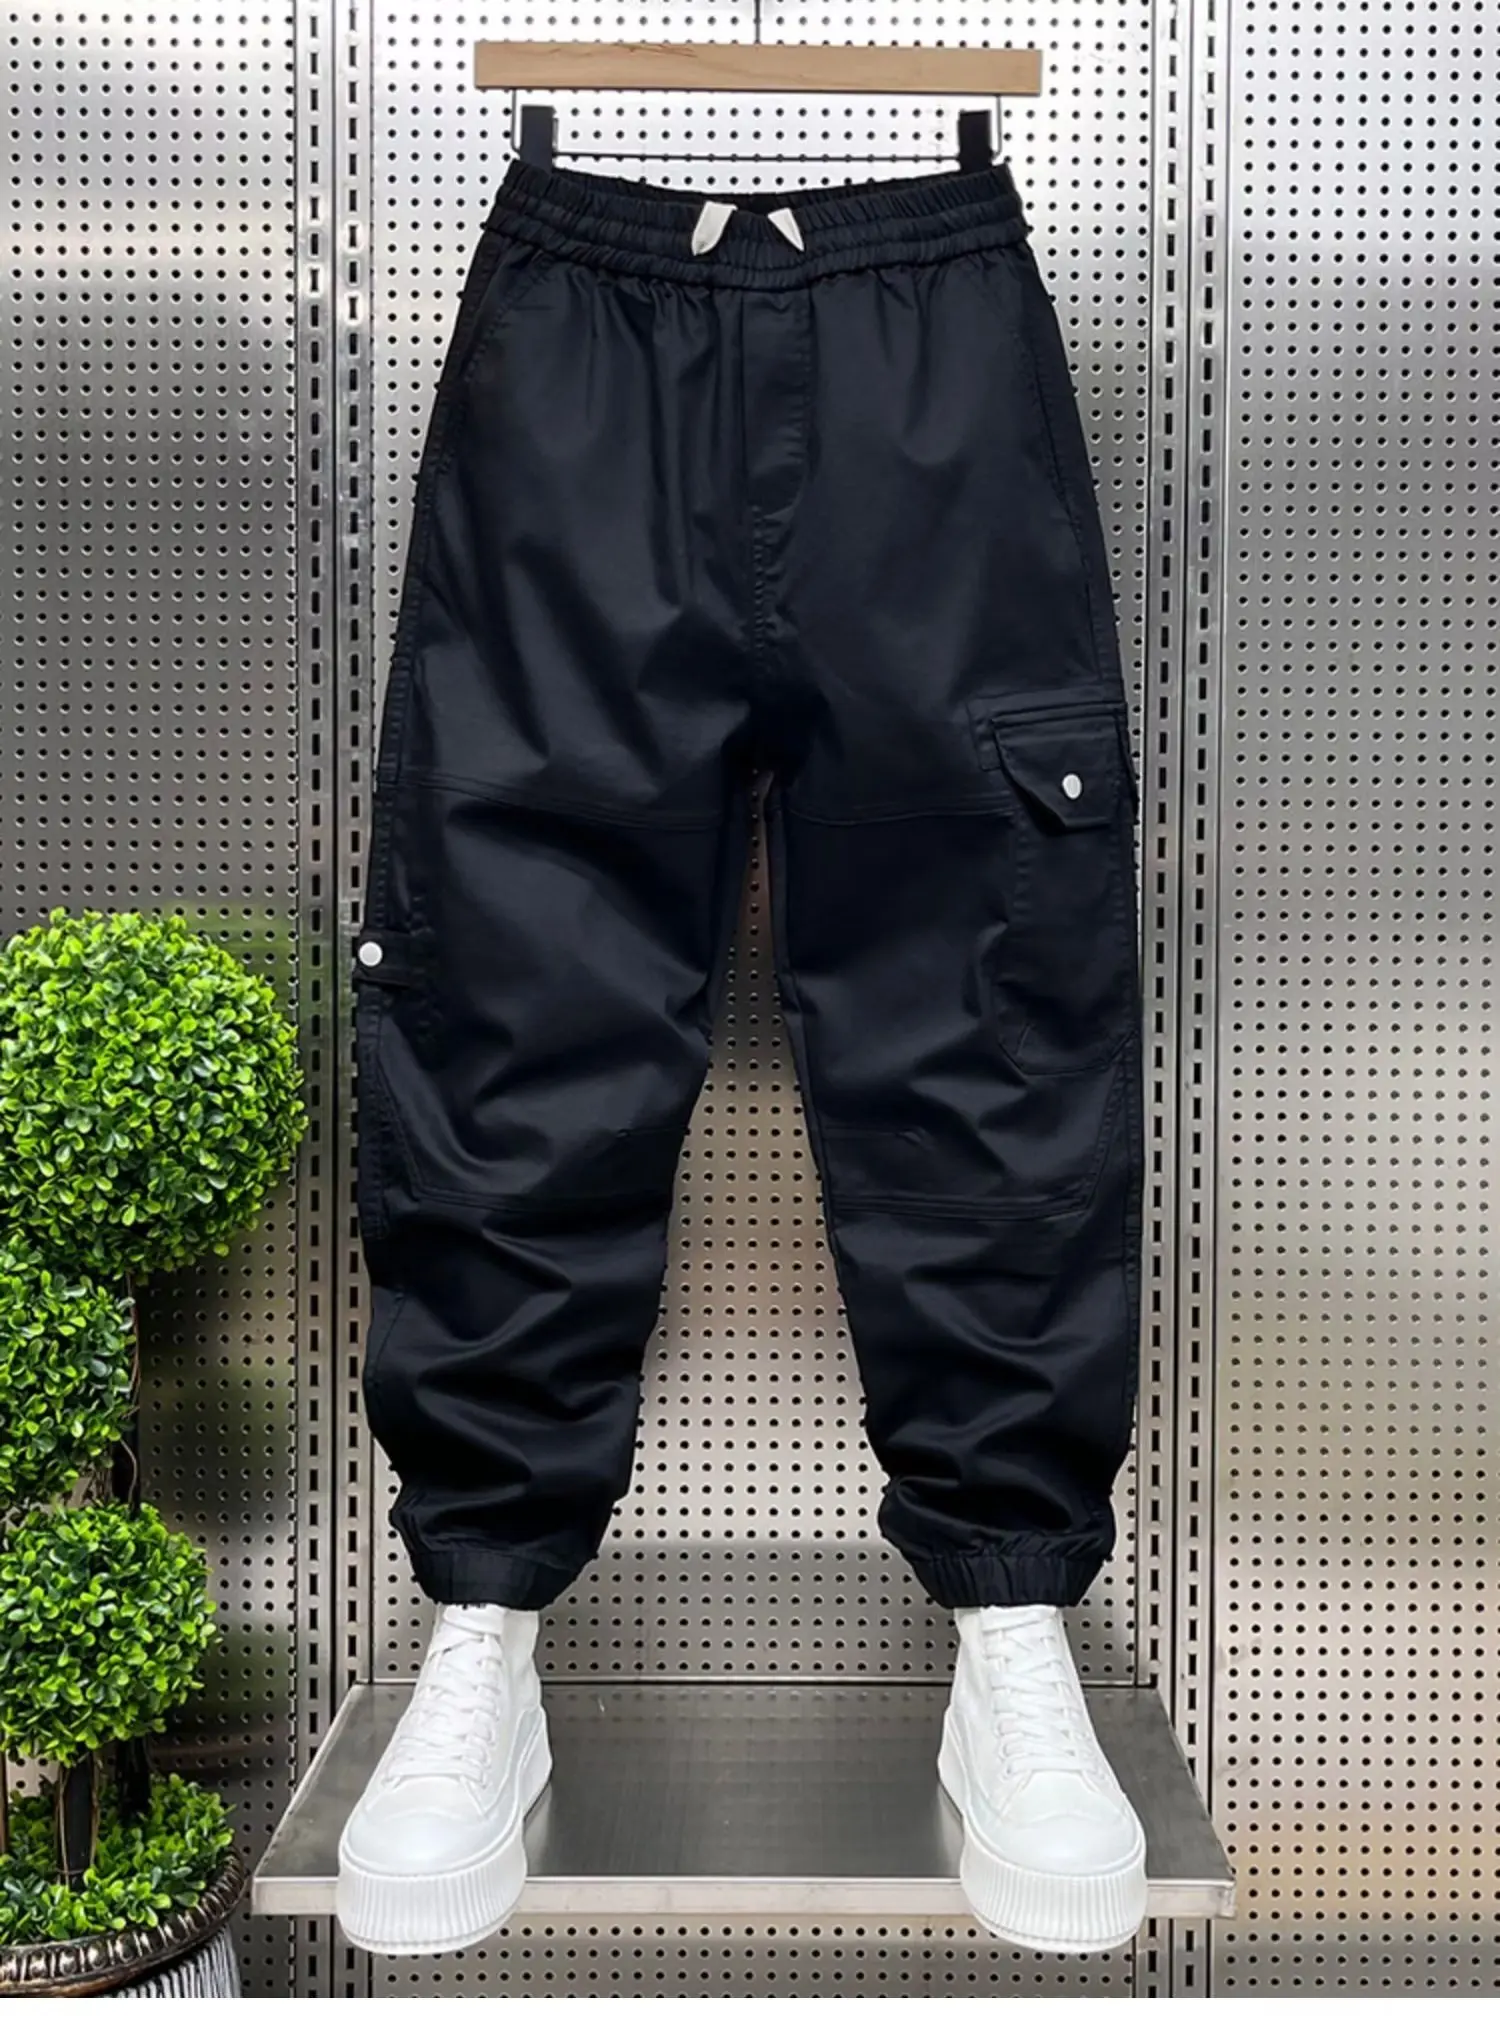 

Pocket Sweatpants Men Harajuku Hip Hop Streetwear Popular Unique Harem Pants Korean Fashion Trousers Jogging Pants Casual Pants